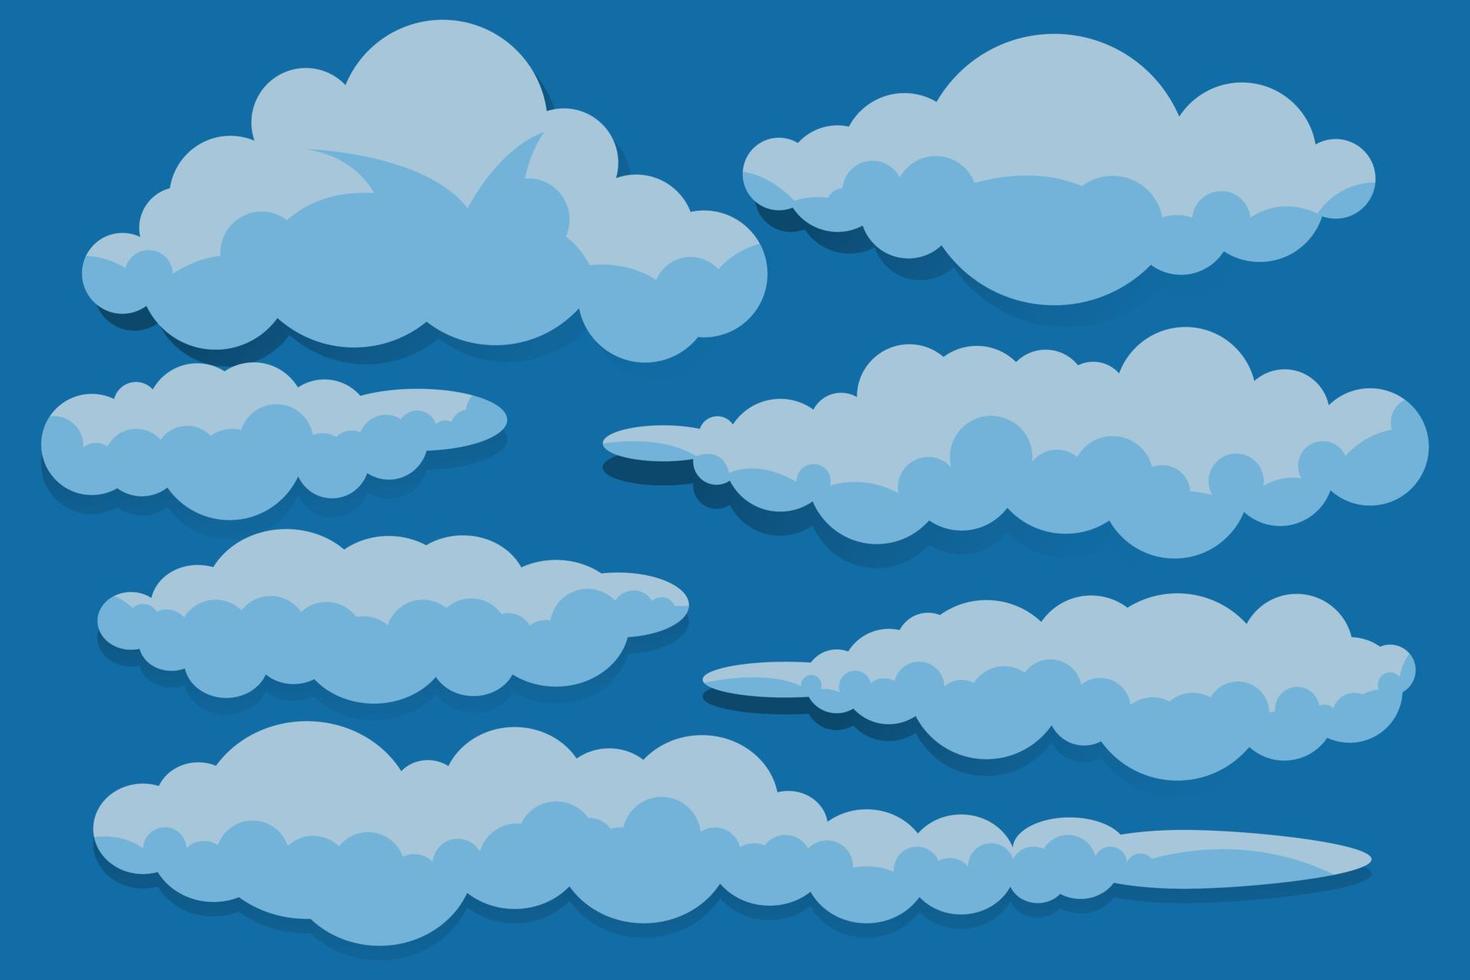 Cloud cartoon collection. Vector illustration